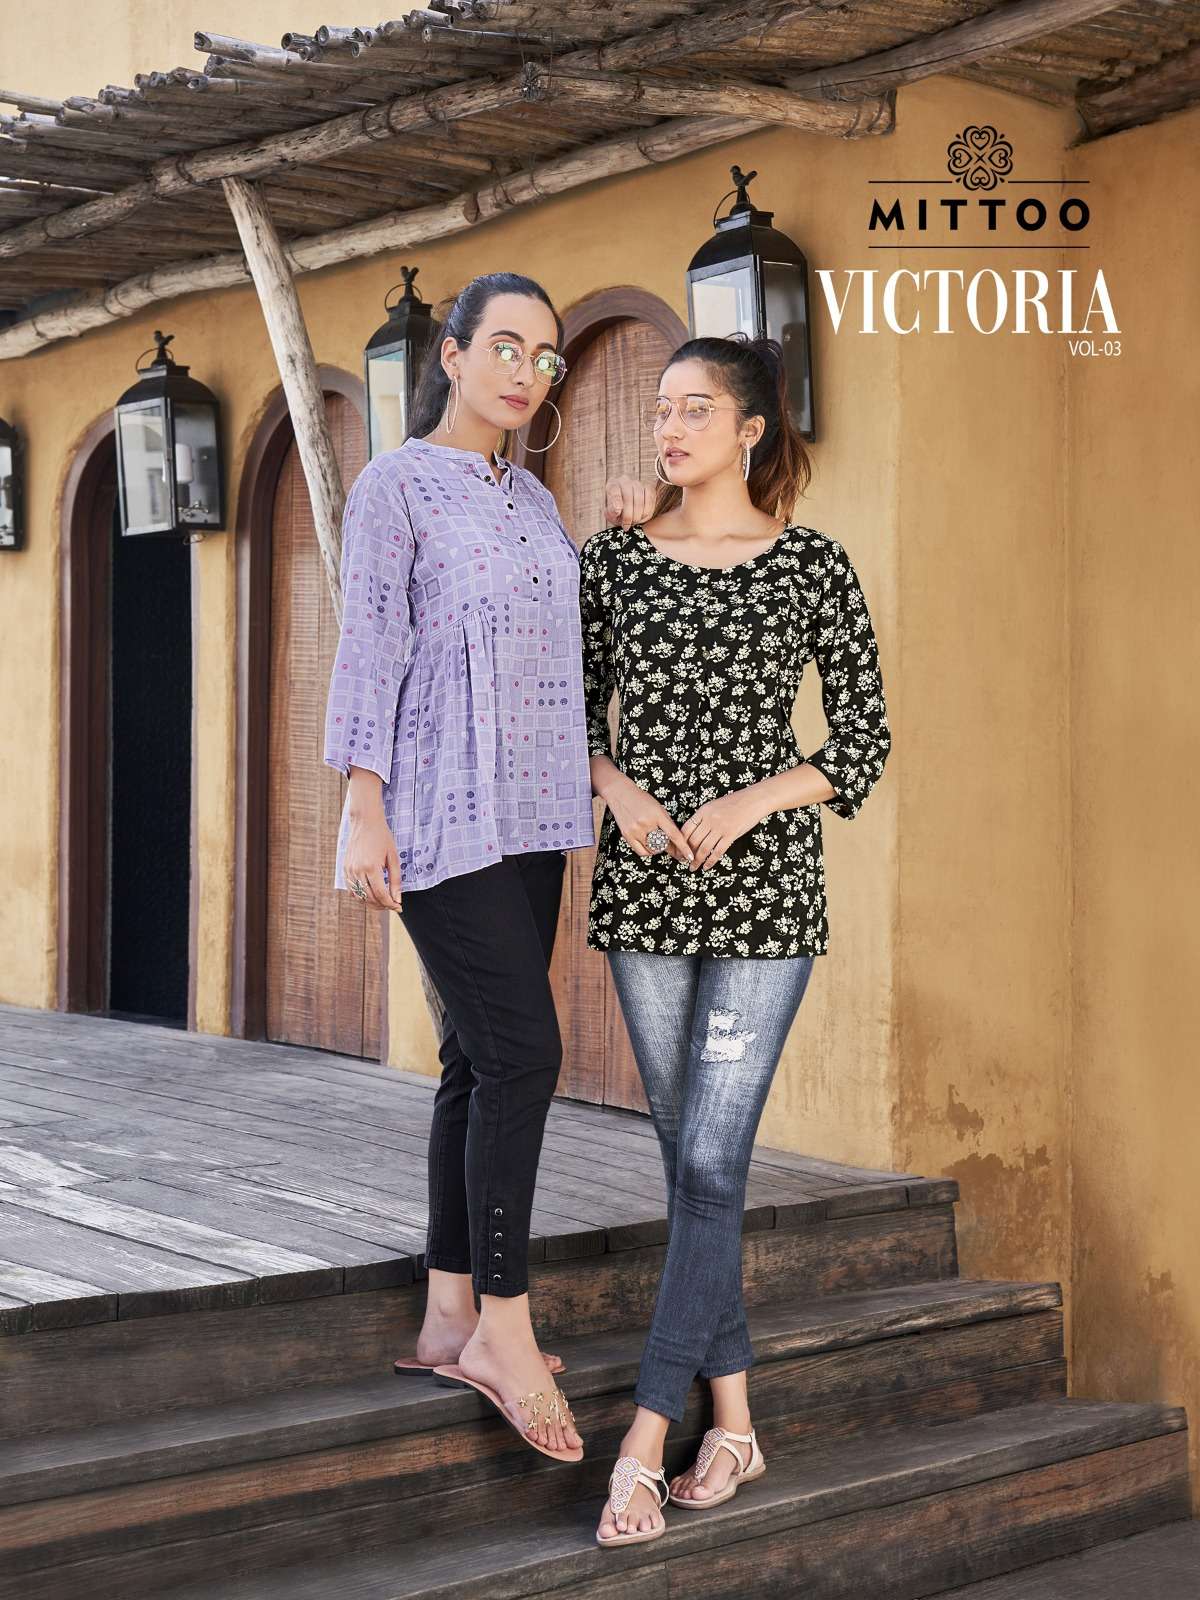 mittoo victoria vol 3 rayon printed summer wear girls short tops